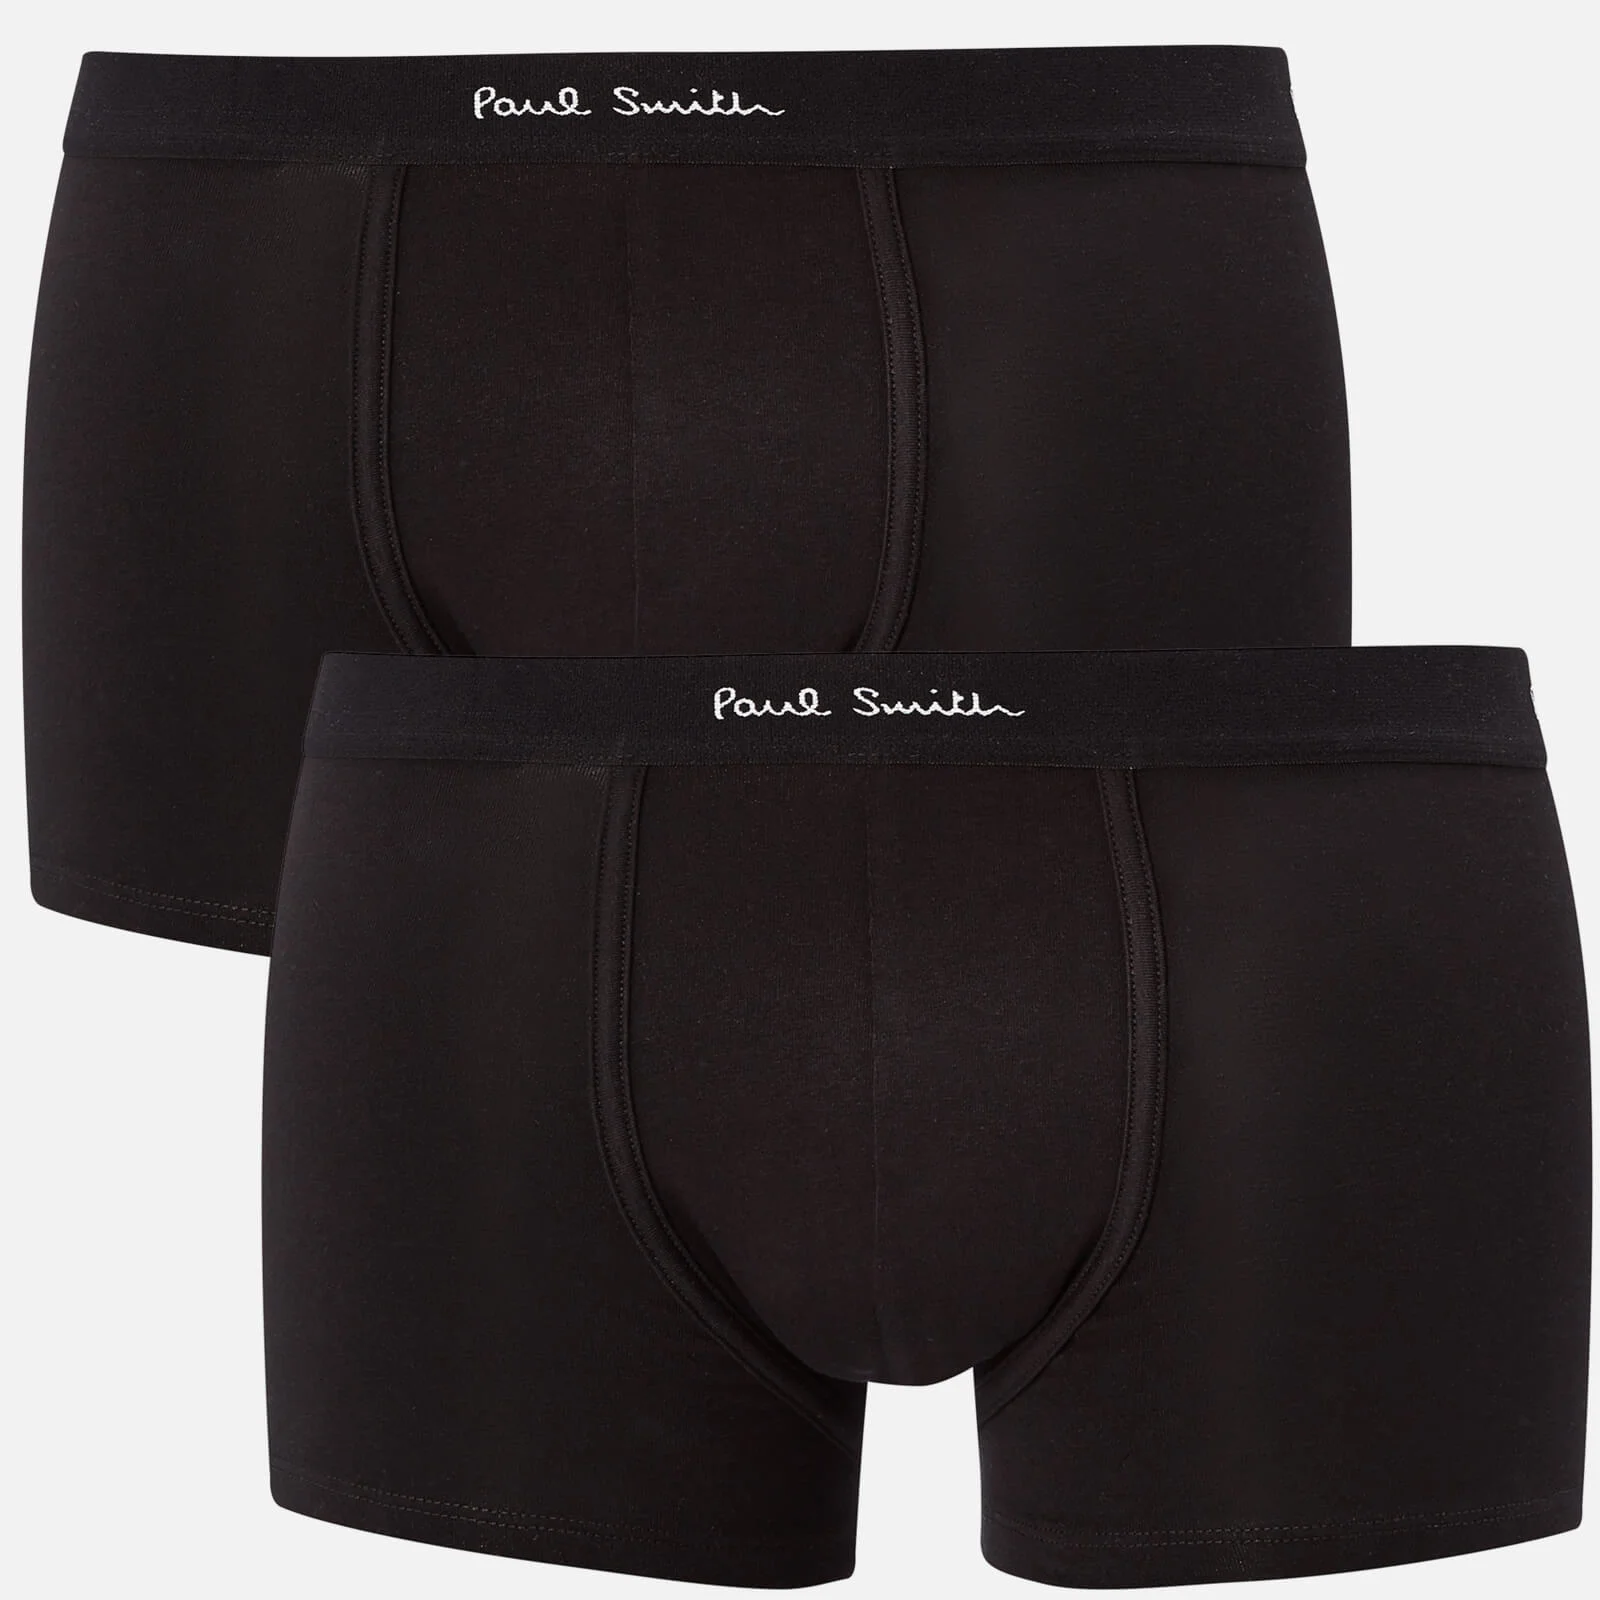 Paul Smith Men's Three Pack Trunk Boxer Shorts - Black/Multi Image 1